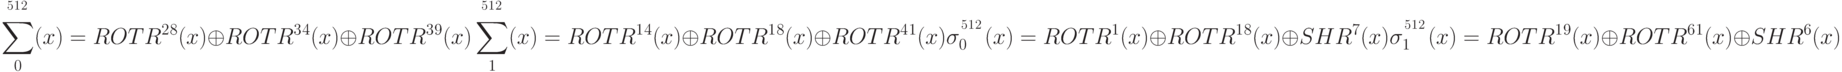 \sum _0^\left{ ^5^1^2^ \right} (x) = ROTR^2^8 (x) \oplus ROTR^3^4 (x) \oplus ROTR^3^9 (x) \\
\sum _1^\left{ ^5^1^2^ \right} (x) = ROTR^1^4 (x) \oplus ROTR^1^8 (x) \oplus ROTR^4^1 (x) \\
\sigma_0^\left{ ^5^1^2^ \right} (x) = ROTR^1 (x) \oplus ROTR^1^8 (x) \oplus SHR^7 (x) \\
\sigma_1^\left{ ^5^1^2^ \right} (x)= ROTR^1^9 (x) \oplus ROTR^6^1 (x) \oplus SHR^6 (x)